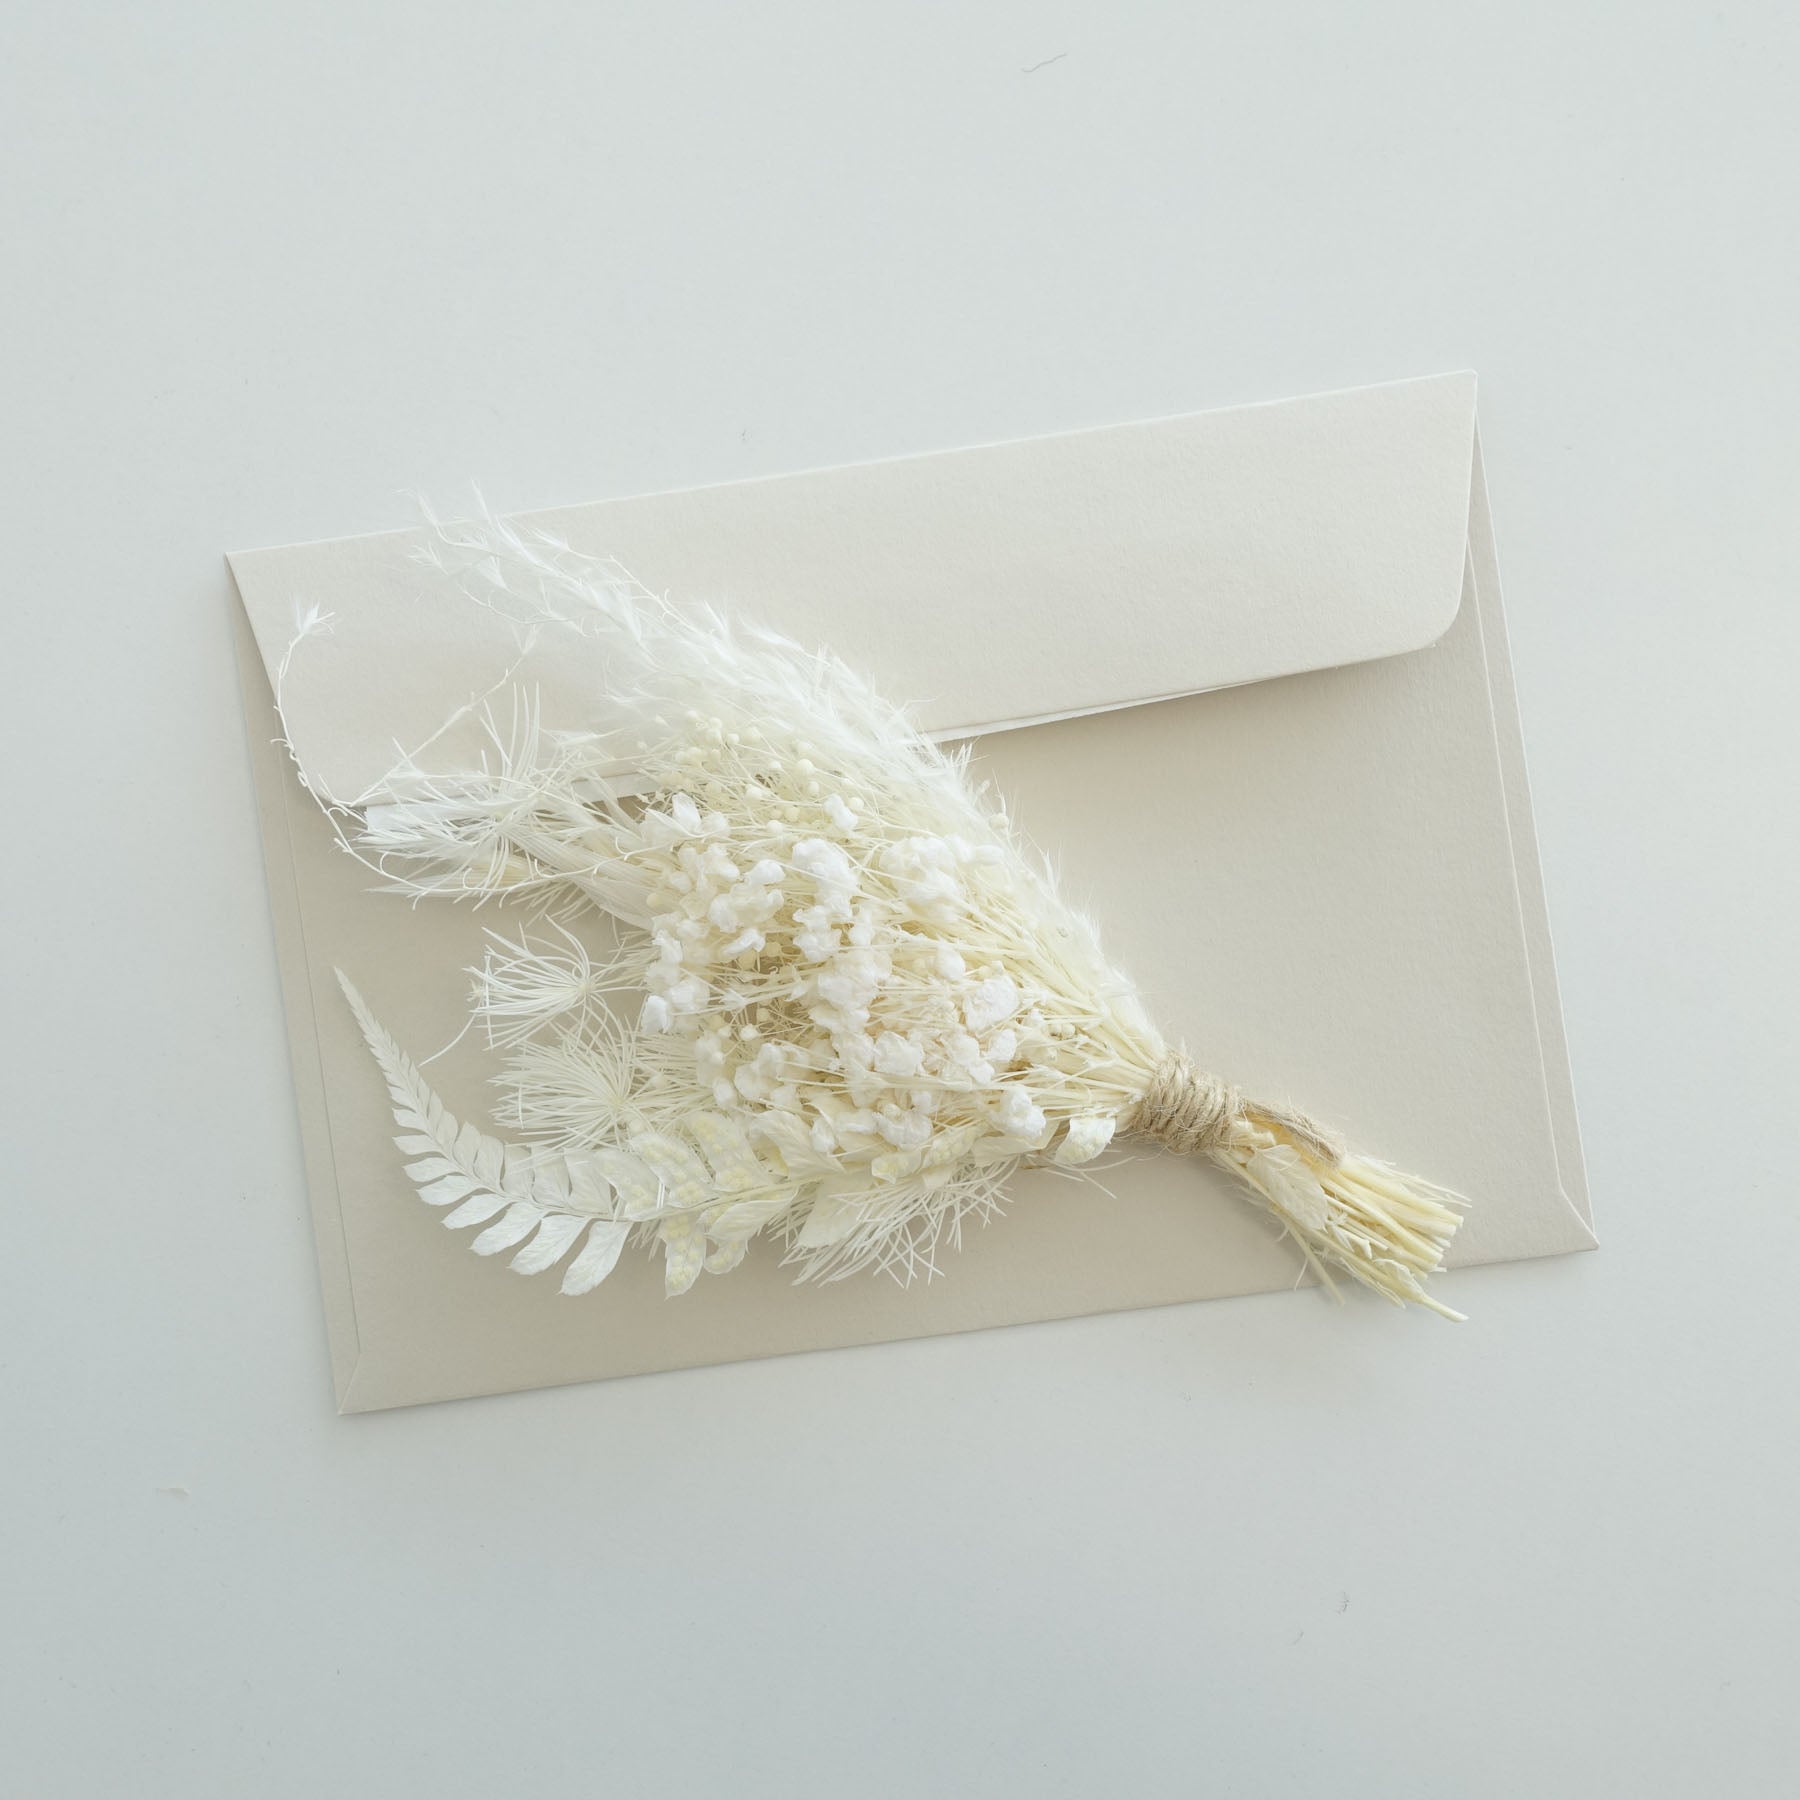 white dried flower posy boutonniere wedding wax seal fiona ariva australia baby's breath hydrangea